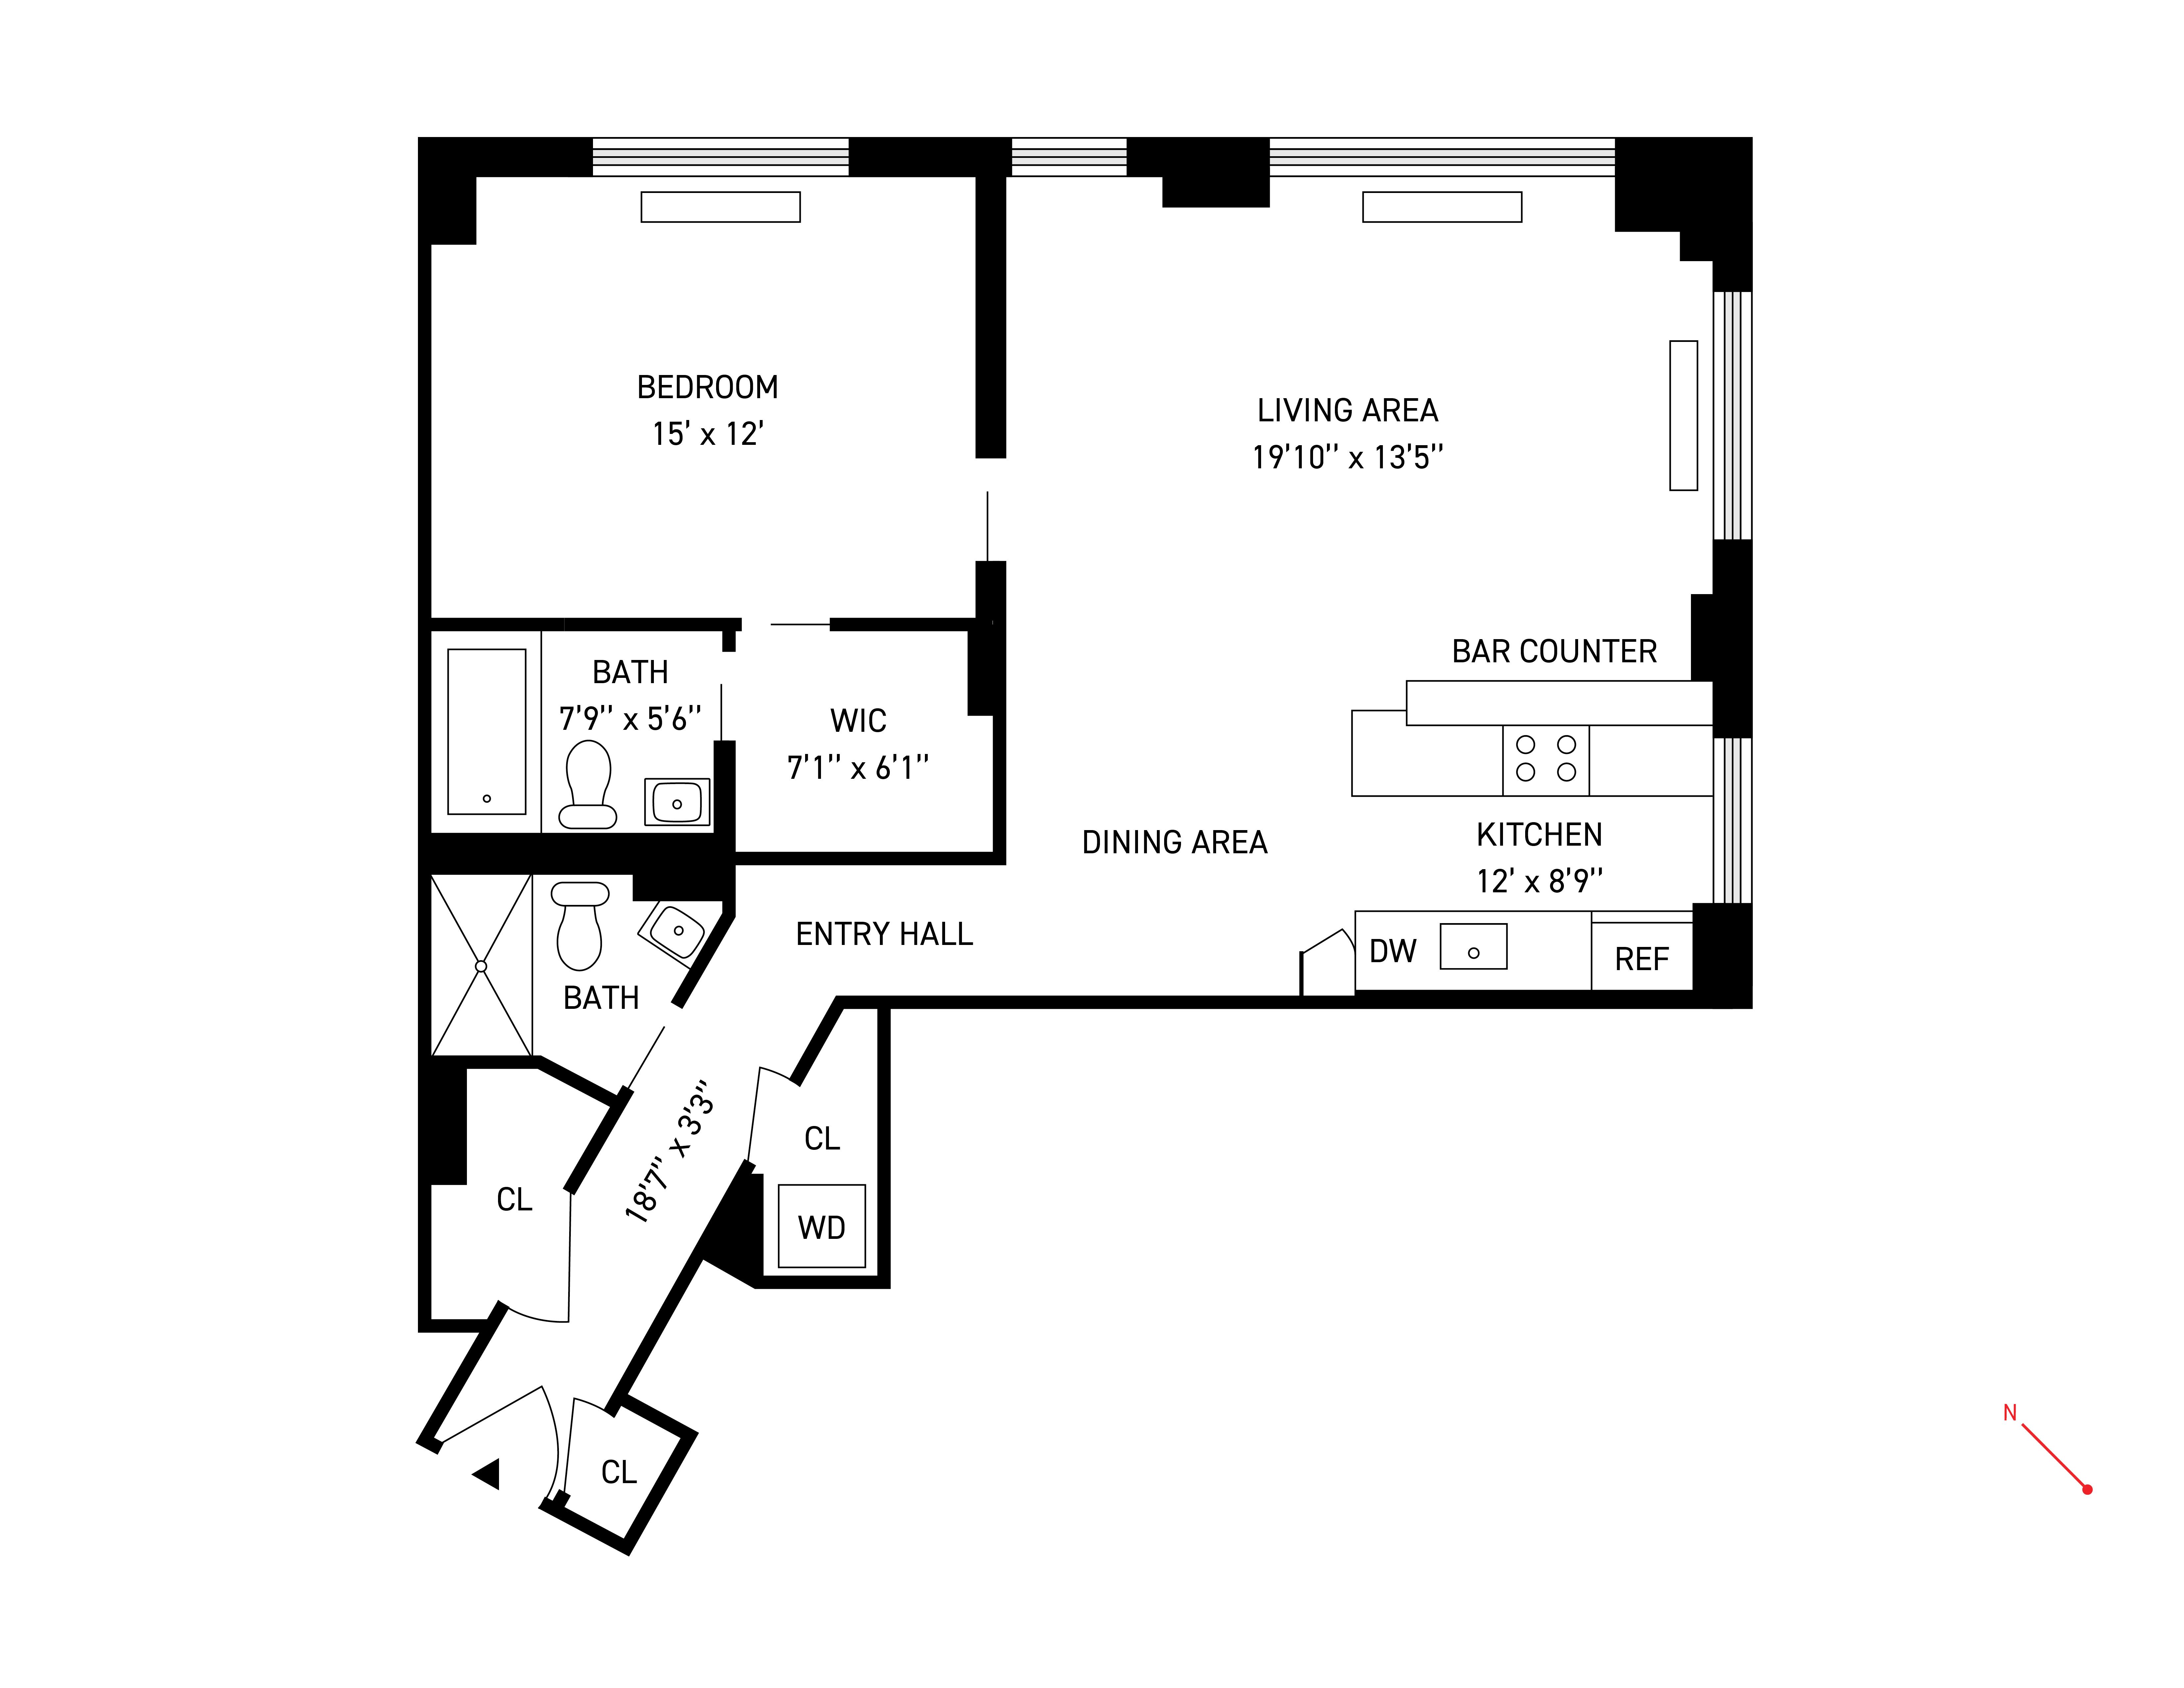 Floorplan for 21 South End Avenue, PH-1Q